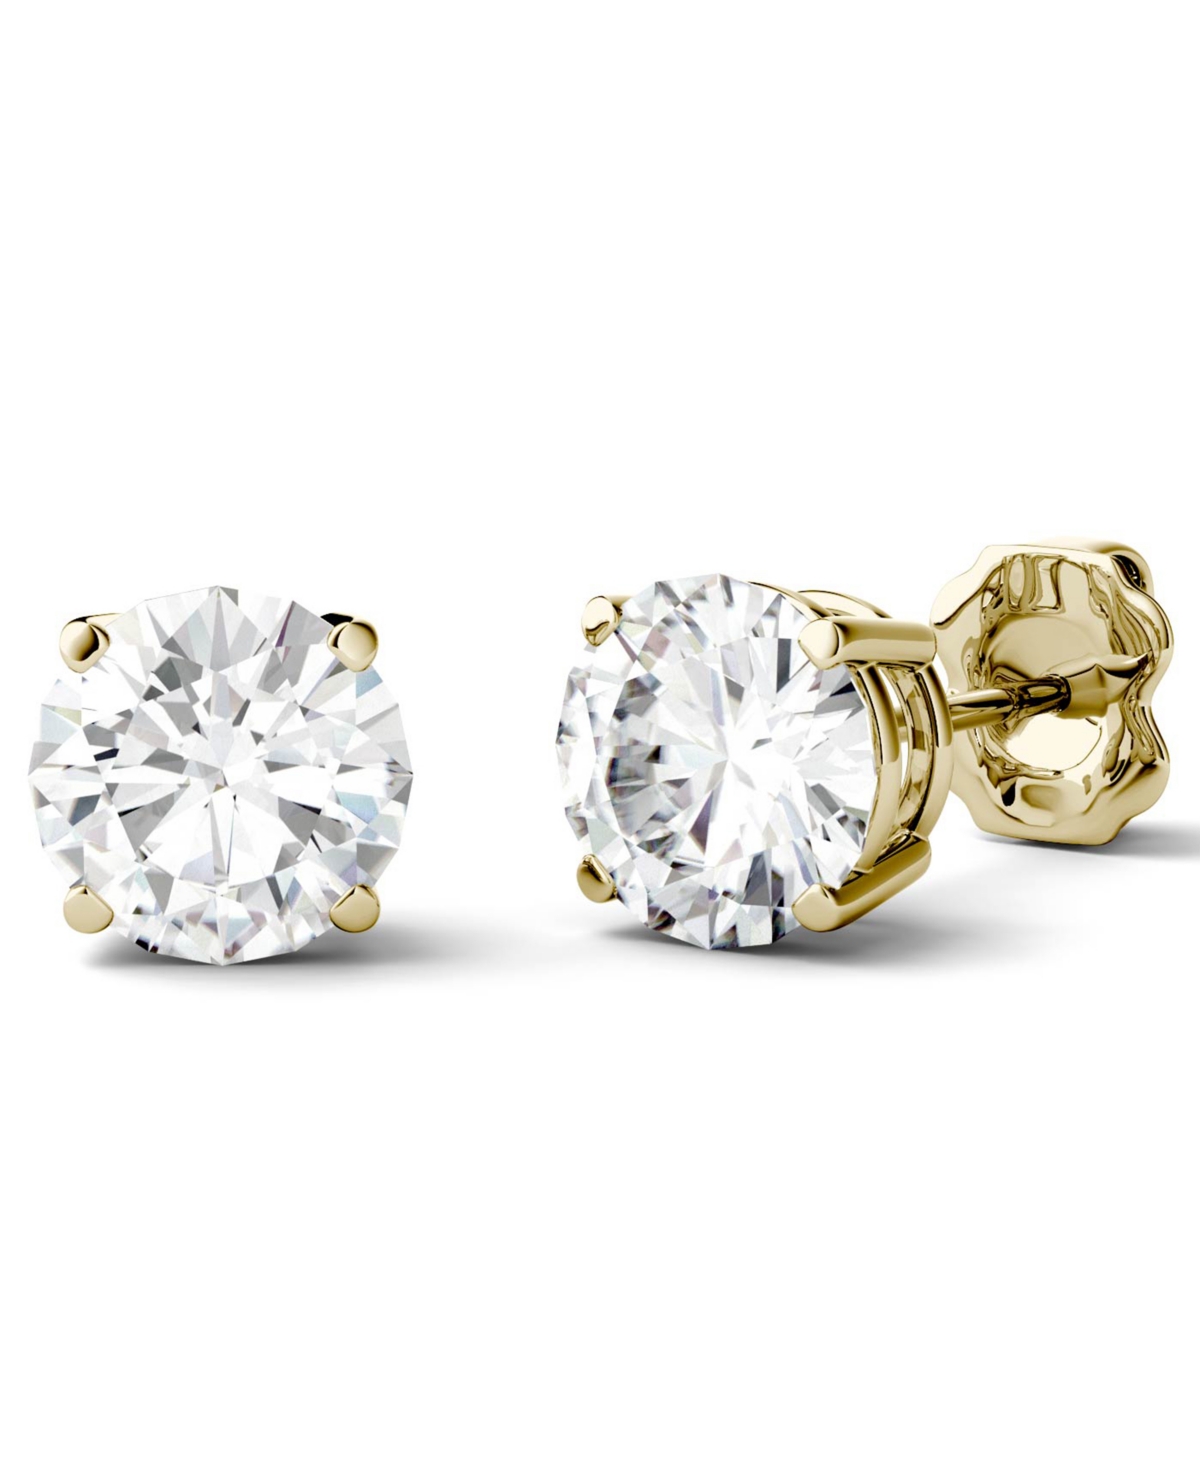 Charles & Colvard Moissanite Stud Earrings (2 ct. t.w. Diamond Equivalent) in 14k White or Yellow Gold